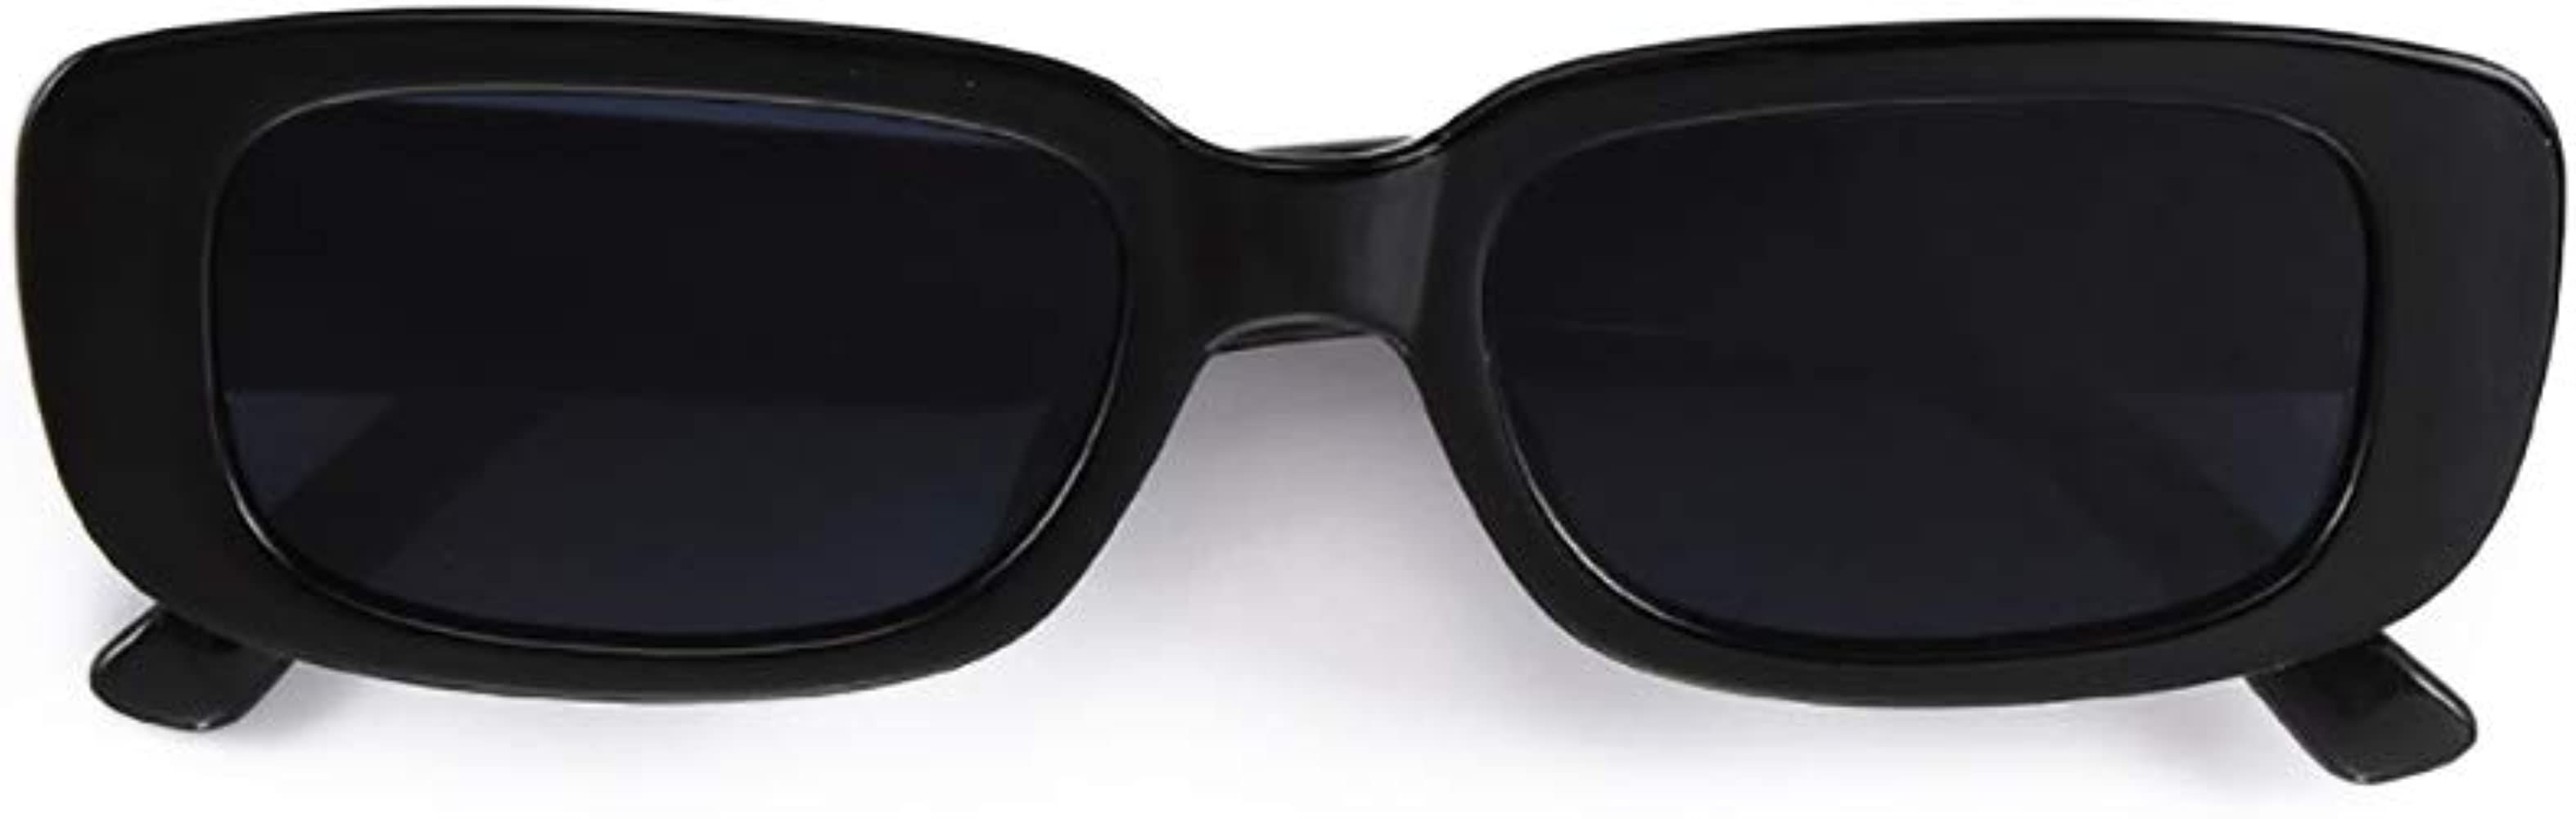 BOJOD Rectangle Sunglasses for Women Retro Fashion Sunglasses UV 400 Protection Square Frame Eyewear | Amazon (US)